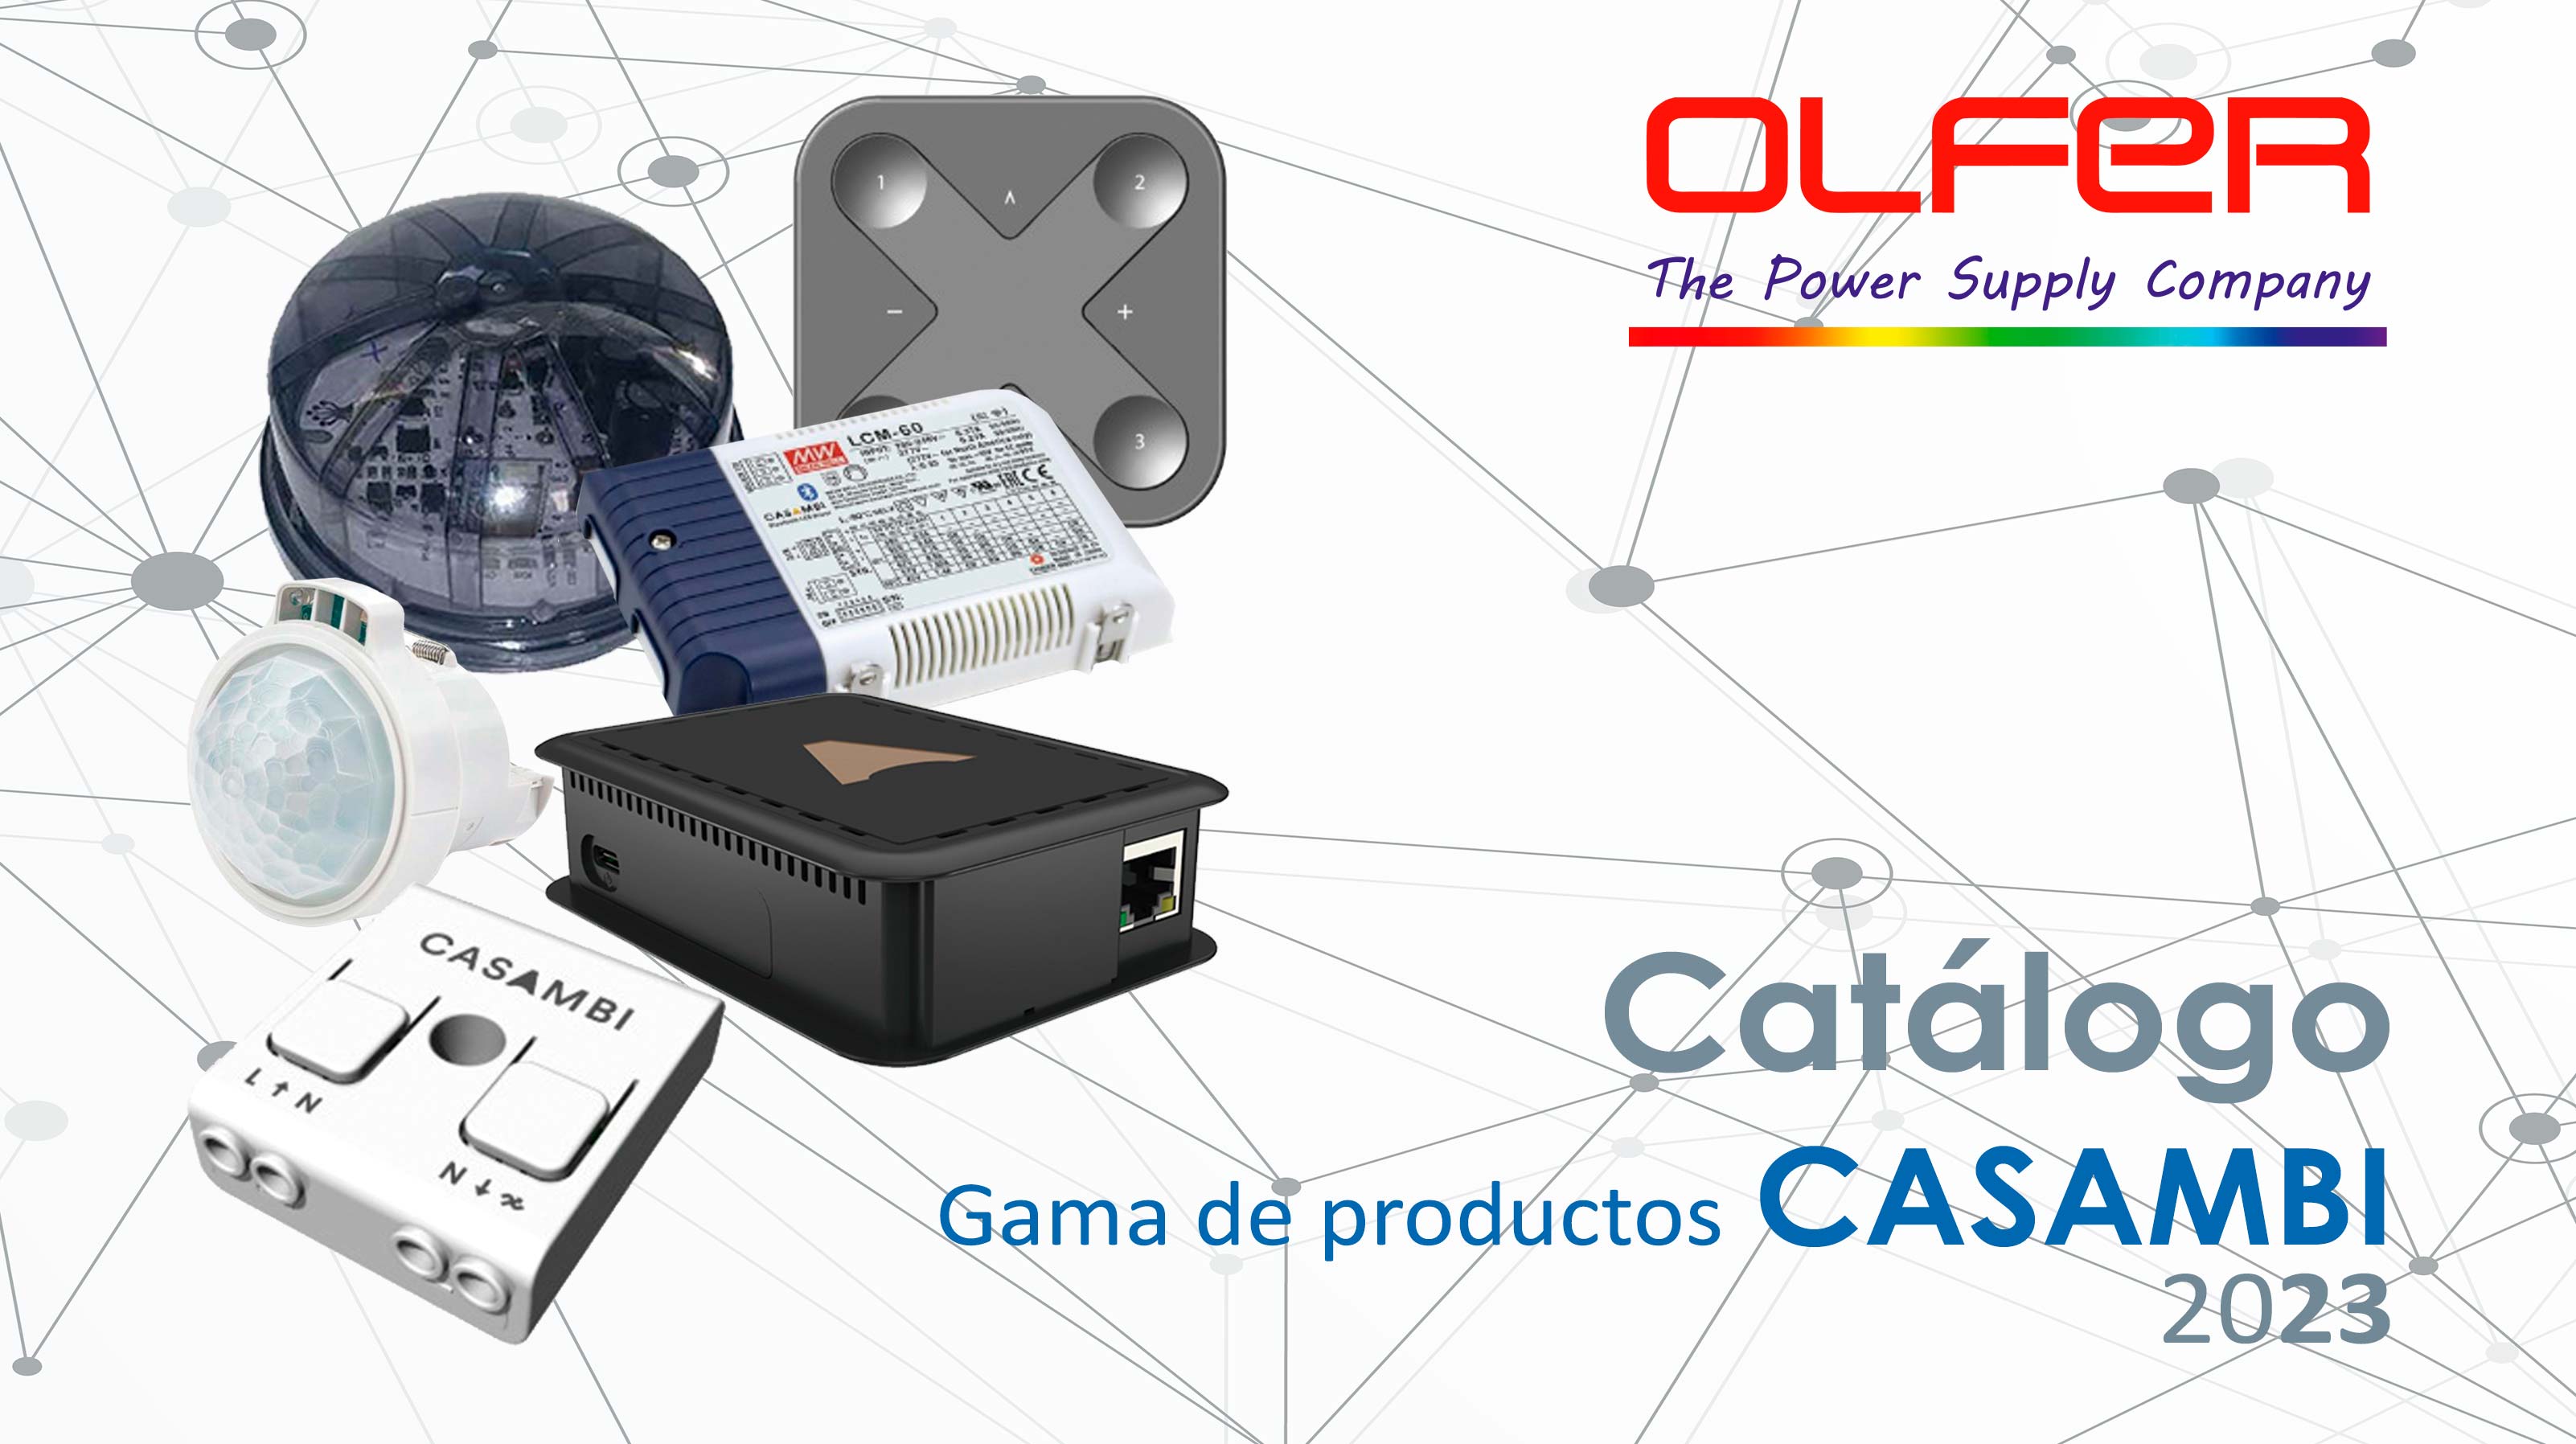 Nuevo catálogo interactivo de productos CASAMBI distribuidos por Electrónica OLFER